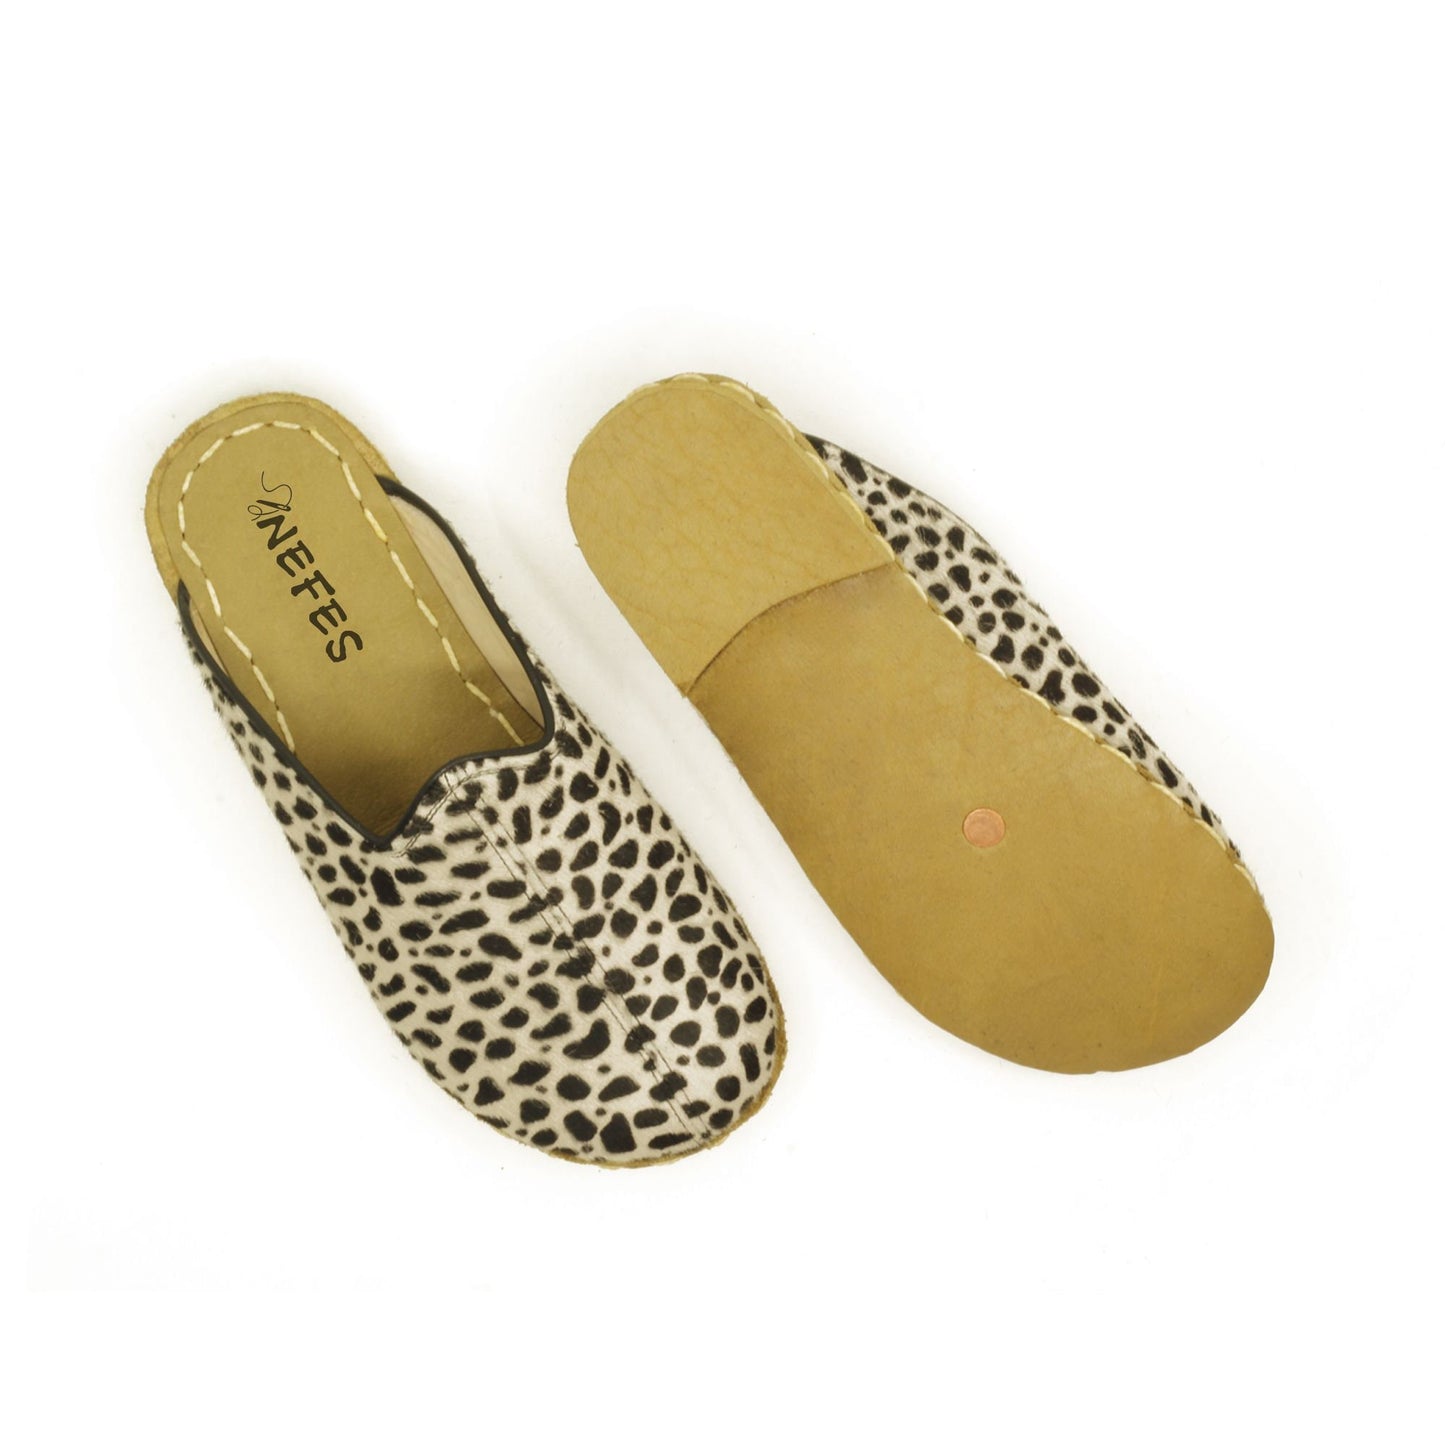 Handmade Moccasin Barefoot Slippers For Women - Nefes Shoes